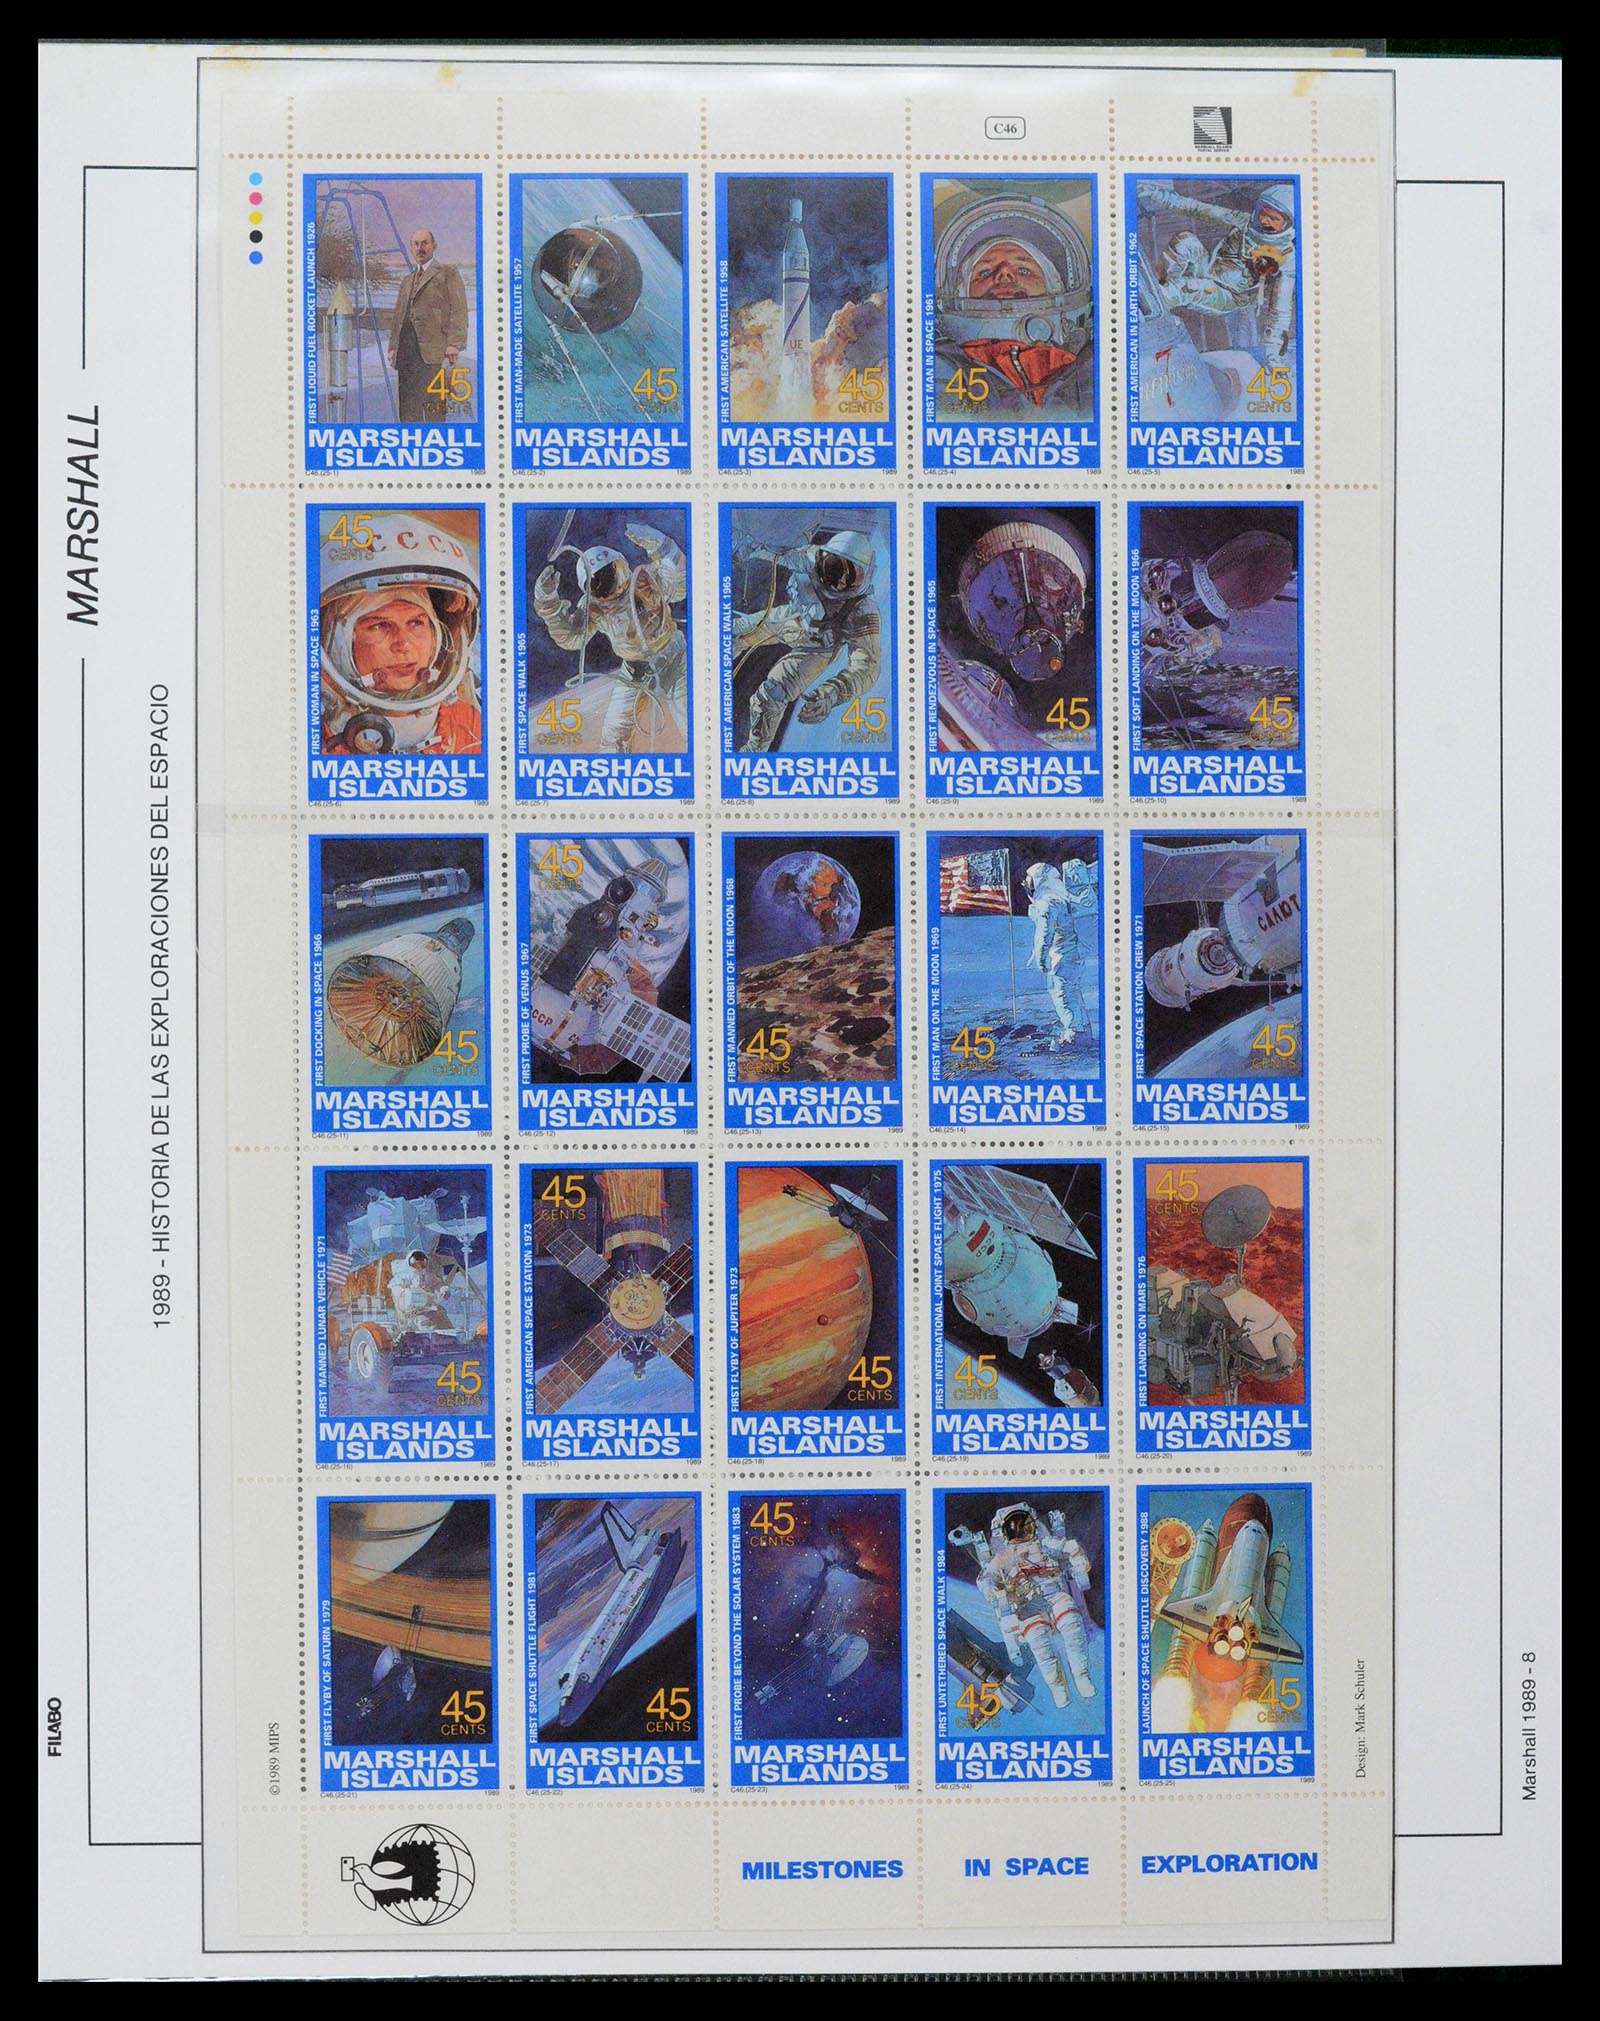 39222 0142 - Stamp collection 39222 Palau, Micronesia and Marshall islands 1980-1995.